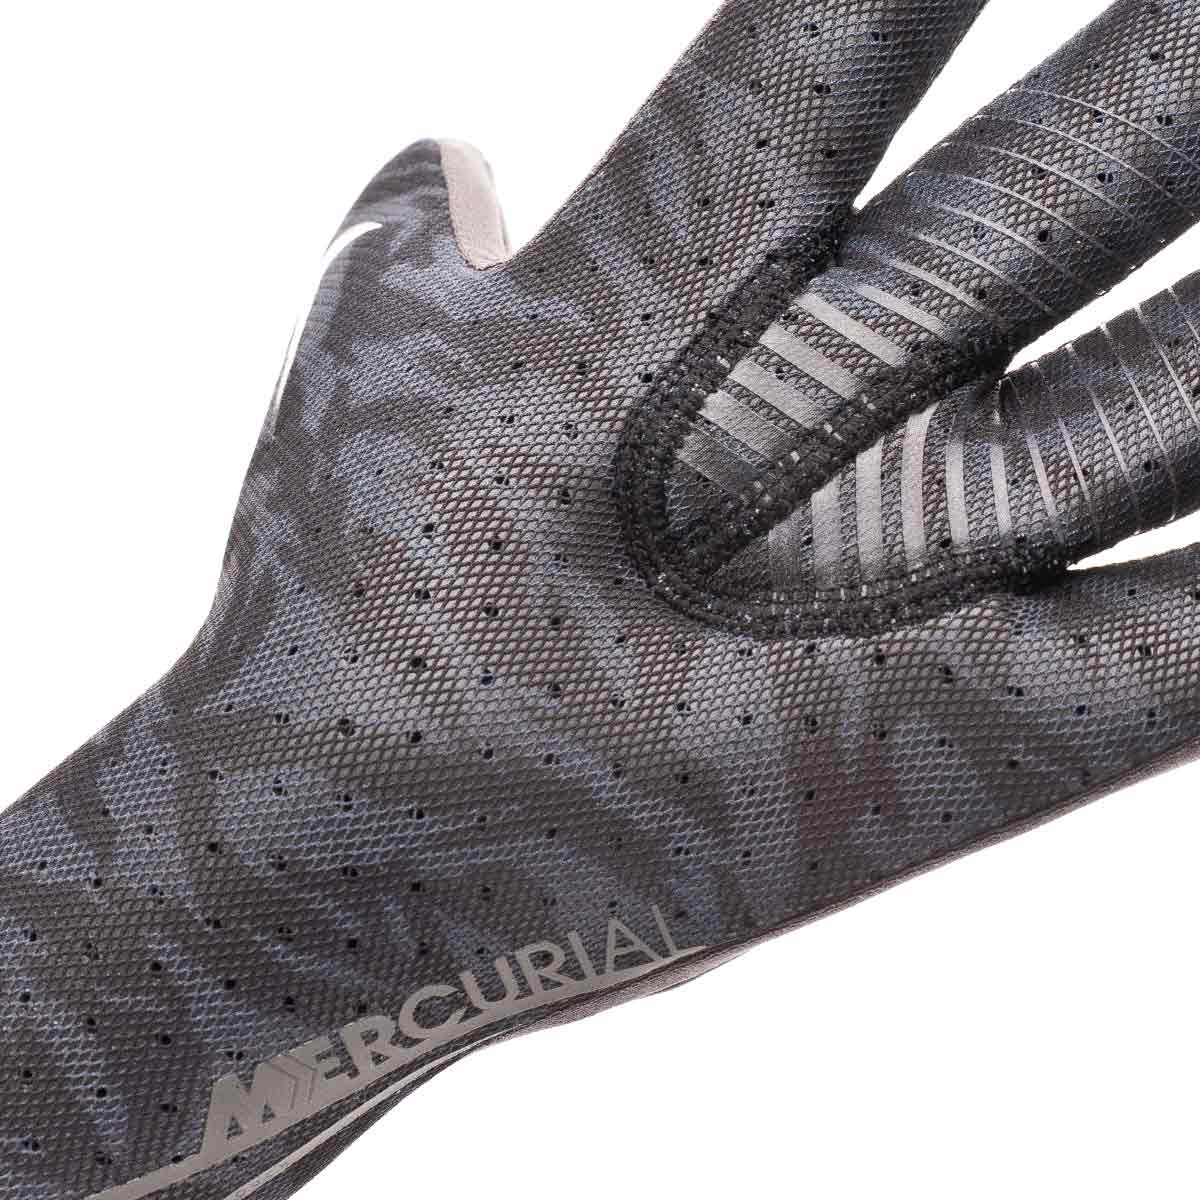 Glove Nike Mercurial Touch Elite Black Anthracite Metallic Silver Futbol Emotion